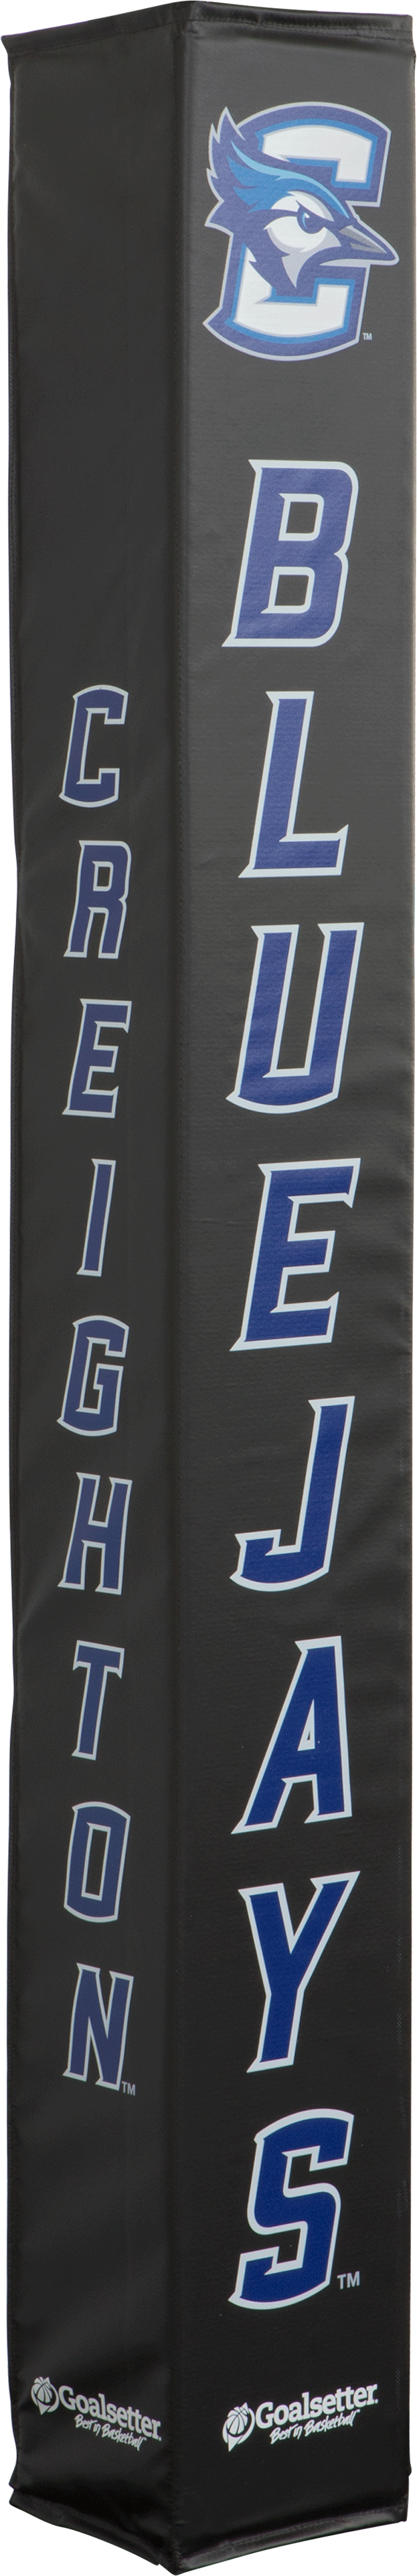 Goalsetter Basketball Collegiate Pole Pad - Creighton Bluejays (Black)